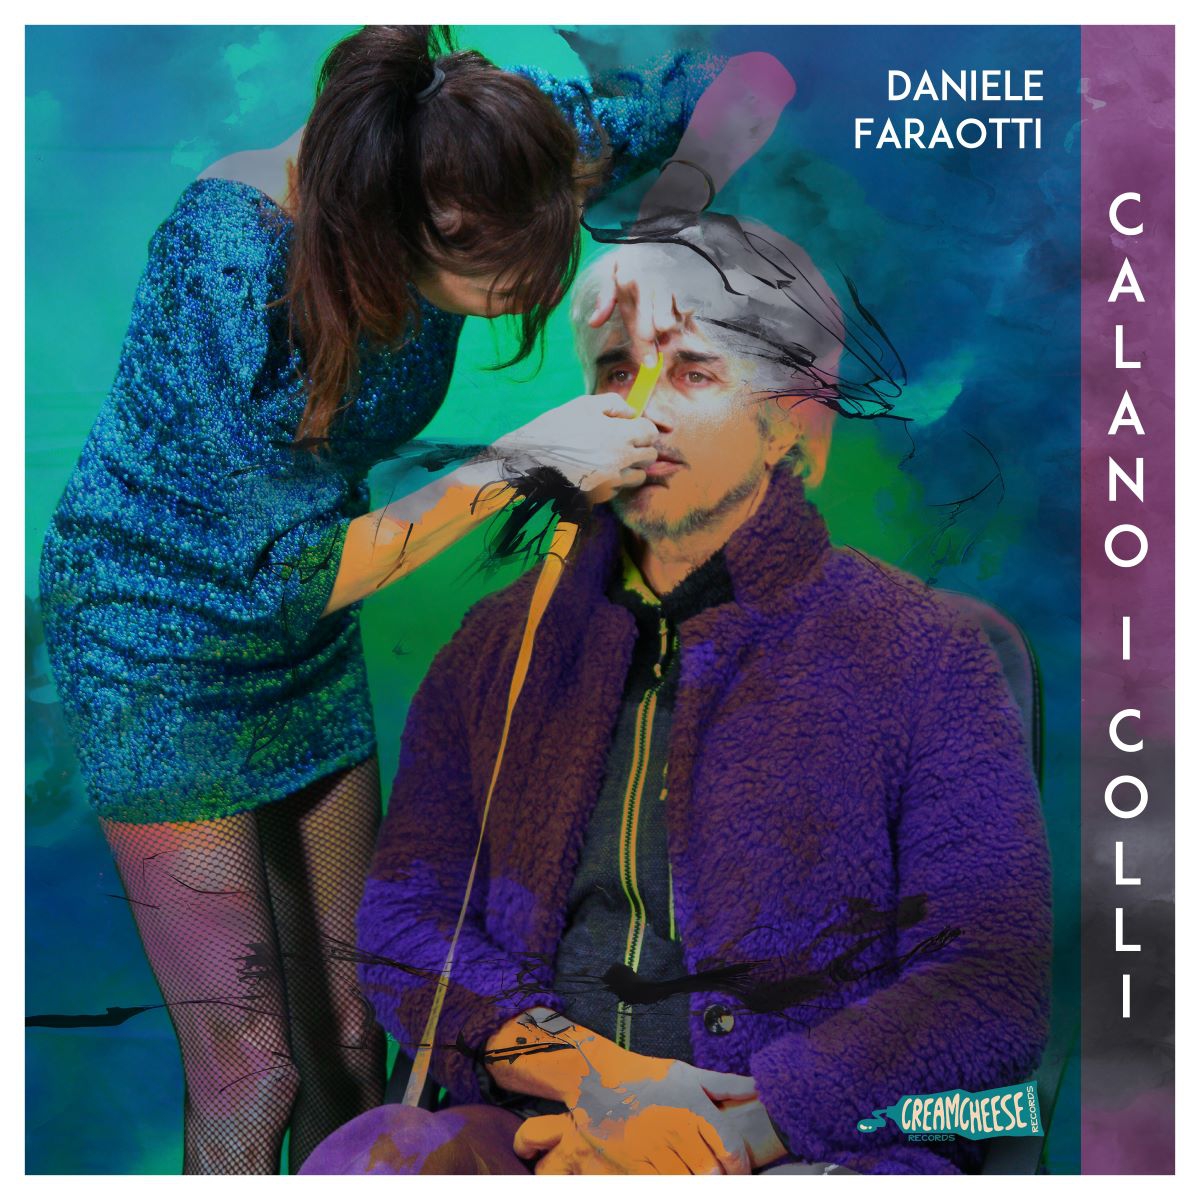 Daniele Faraotti - Il singolo “Calano i Colli”